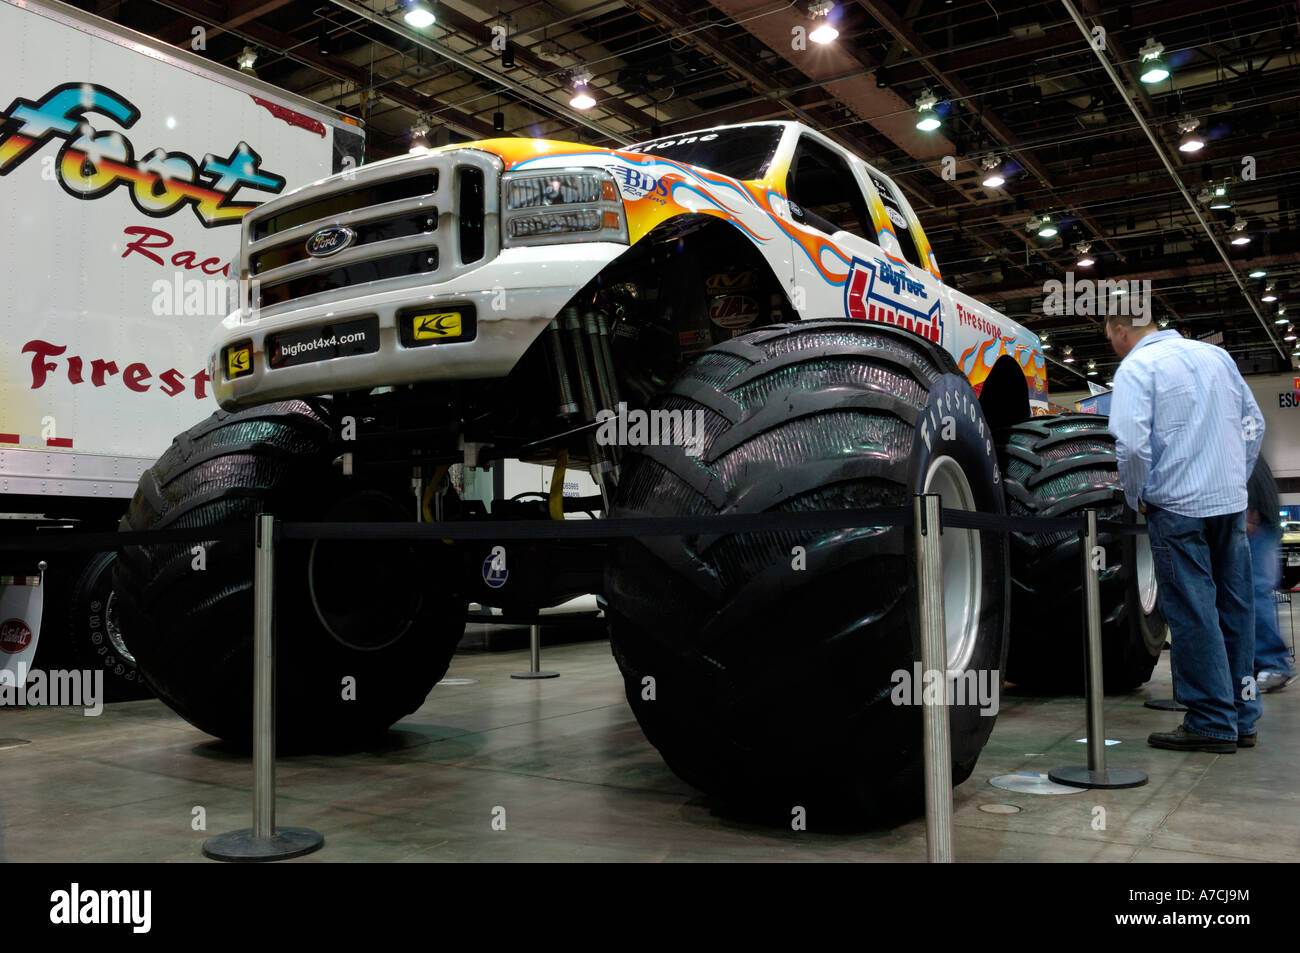 Bigfoot monster truck at the 2007 Detroit Autorama hot rod show Stock Photo